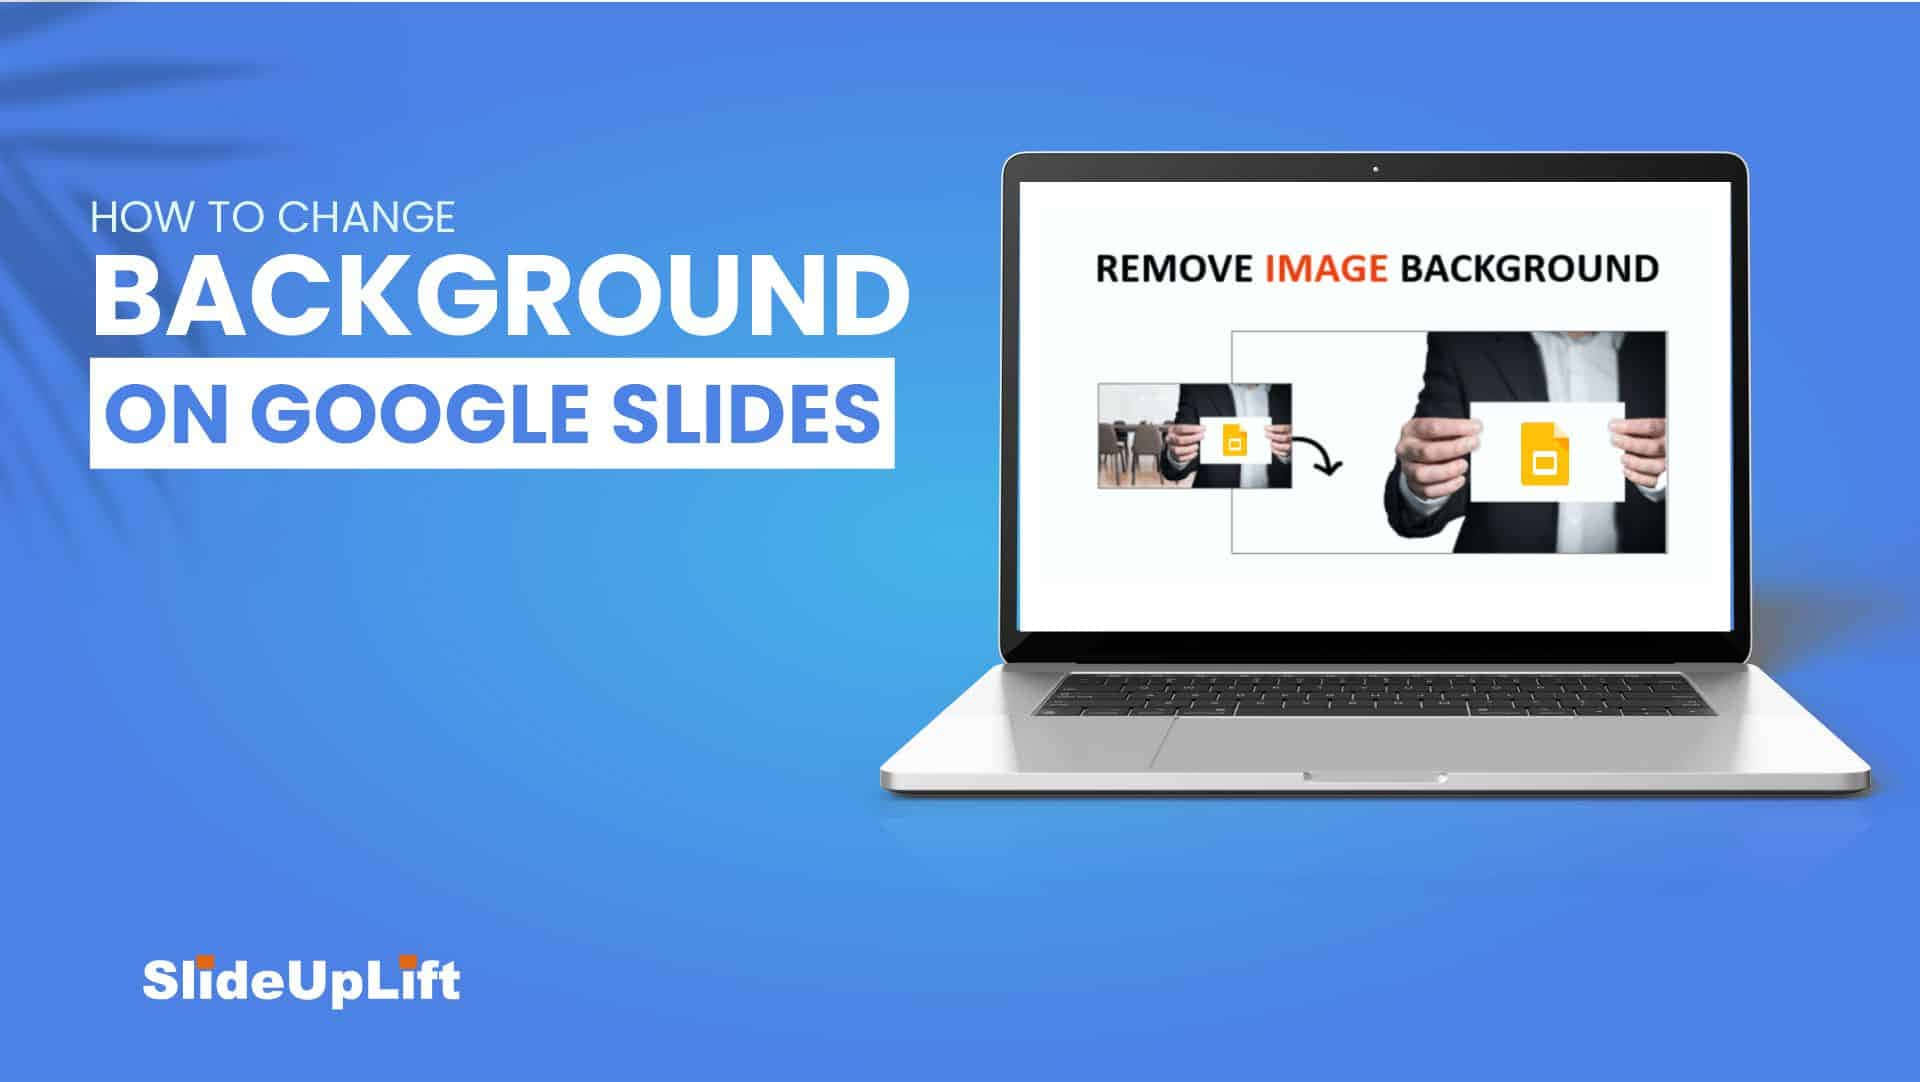 Google Slides helps you create and deliver compelling presentations